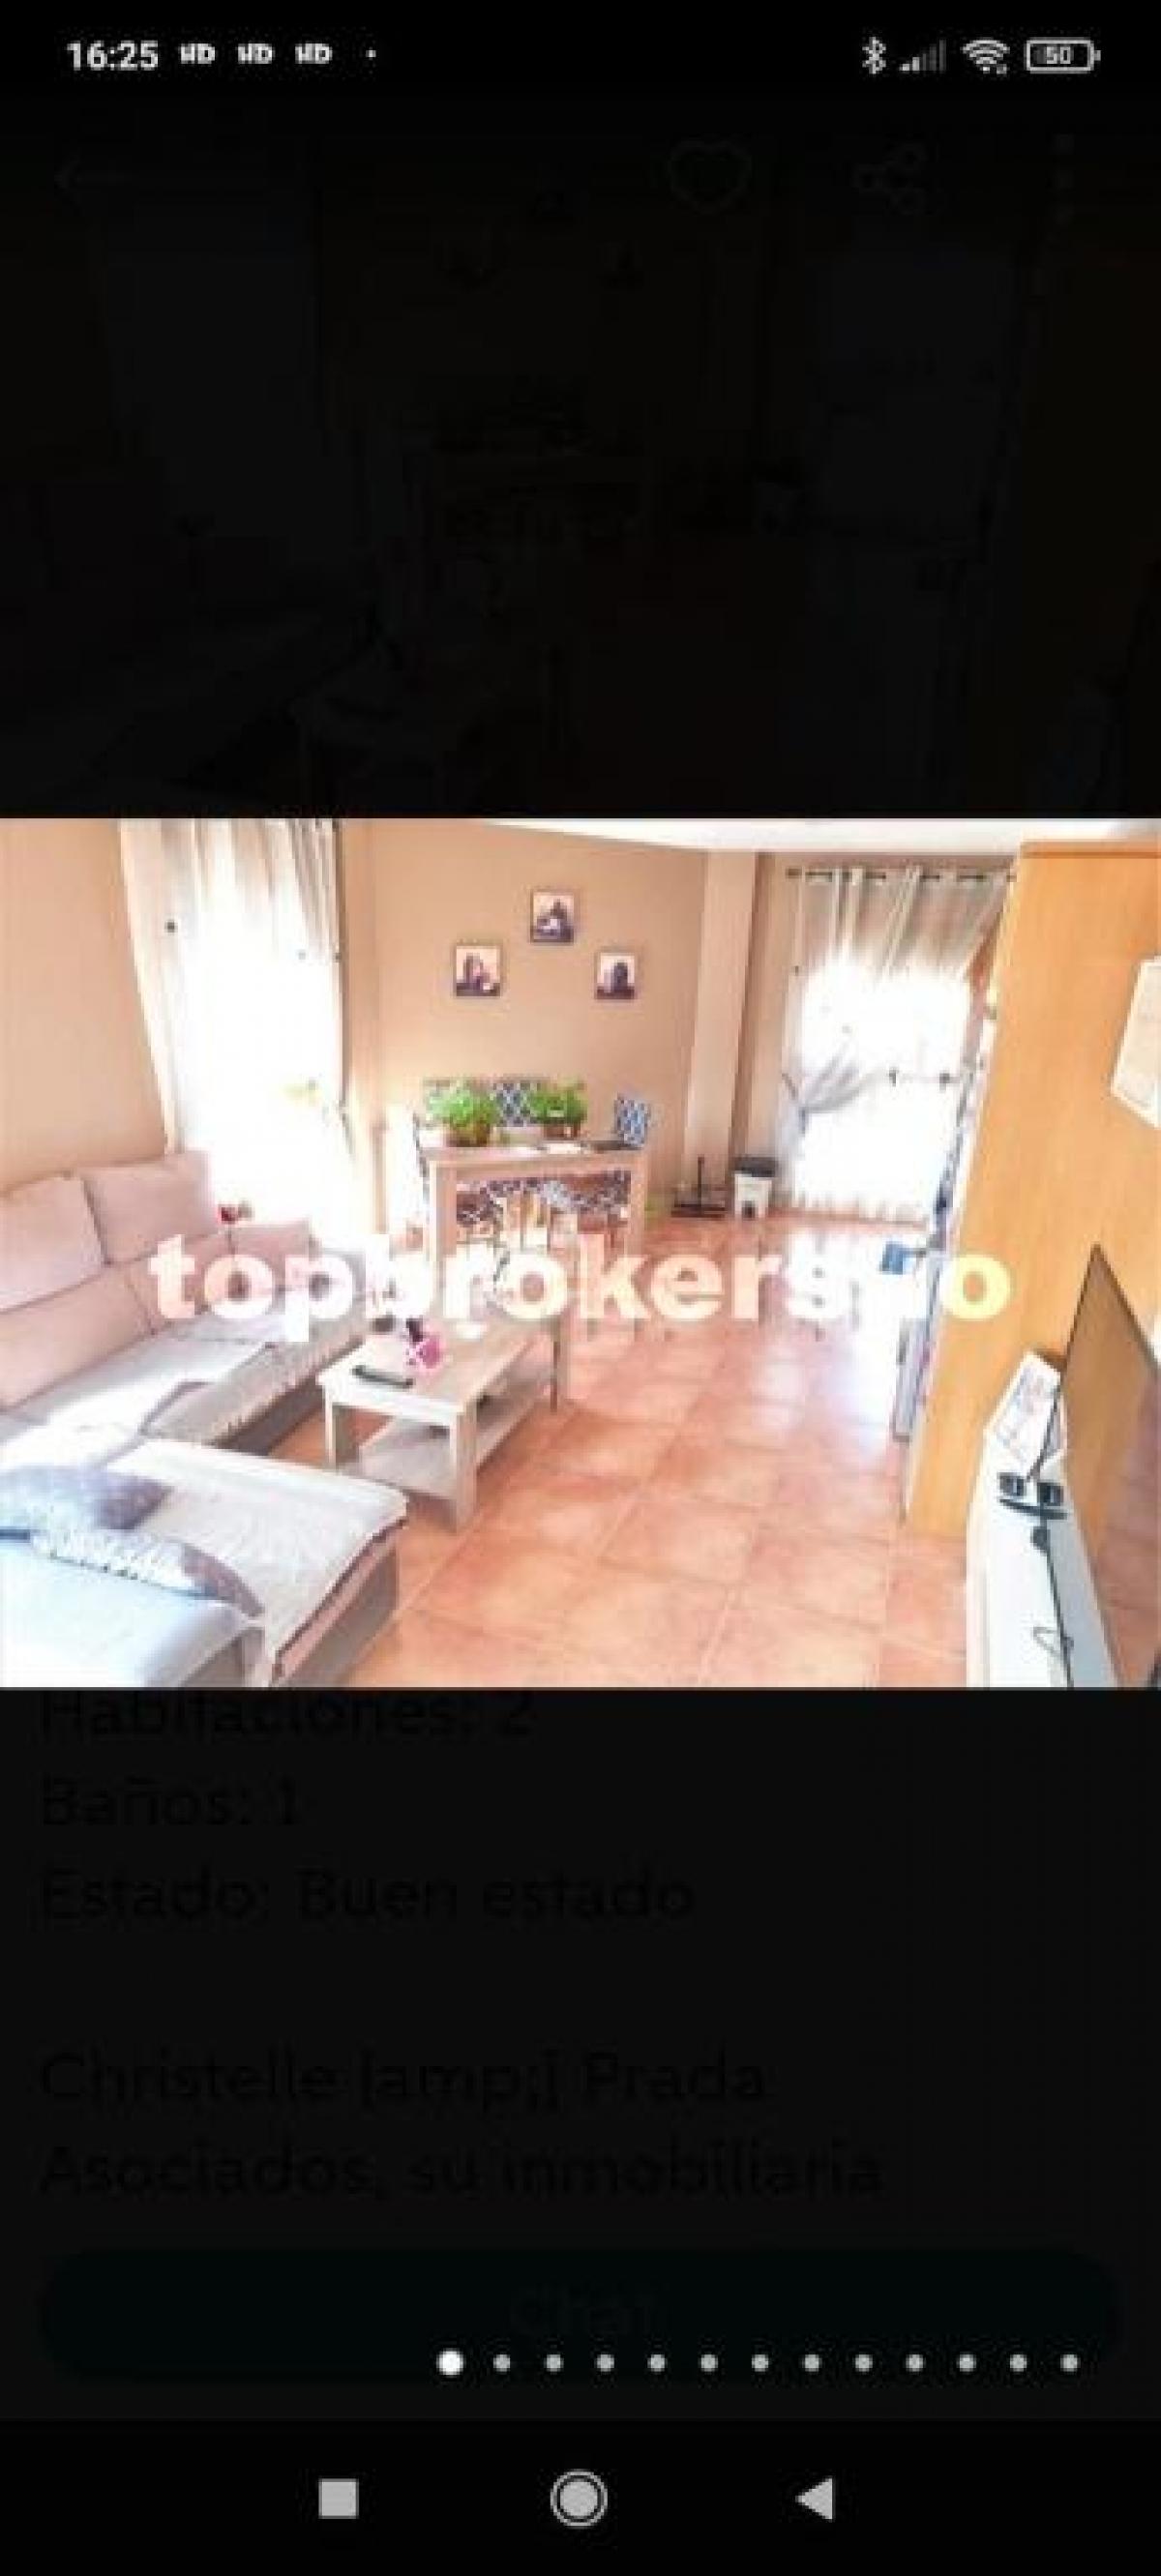 Picture of Apartment For Sale in Orxeta, Alicante, Spain